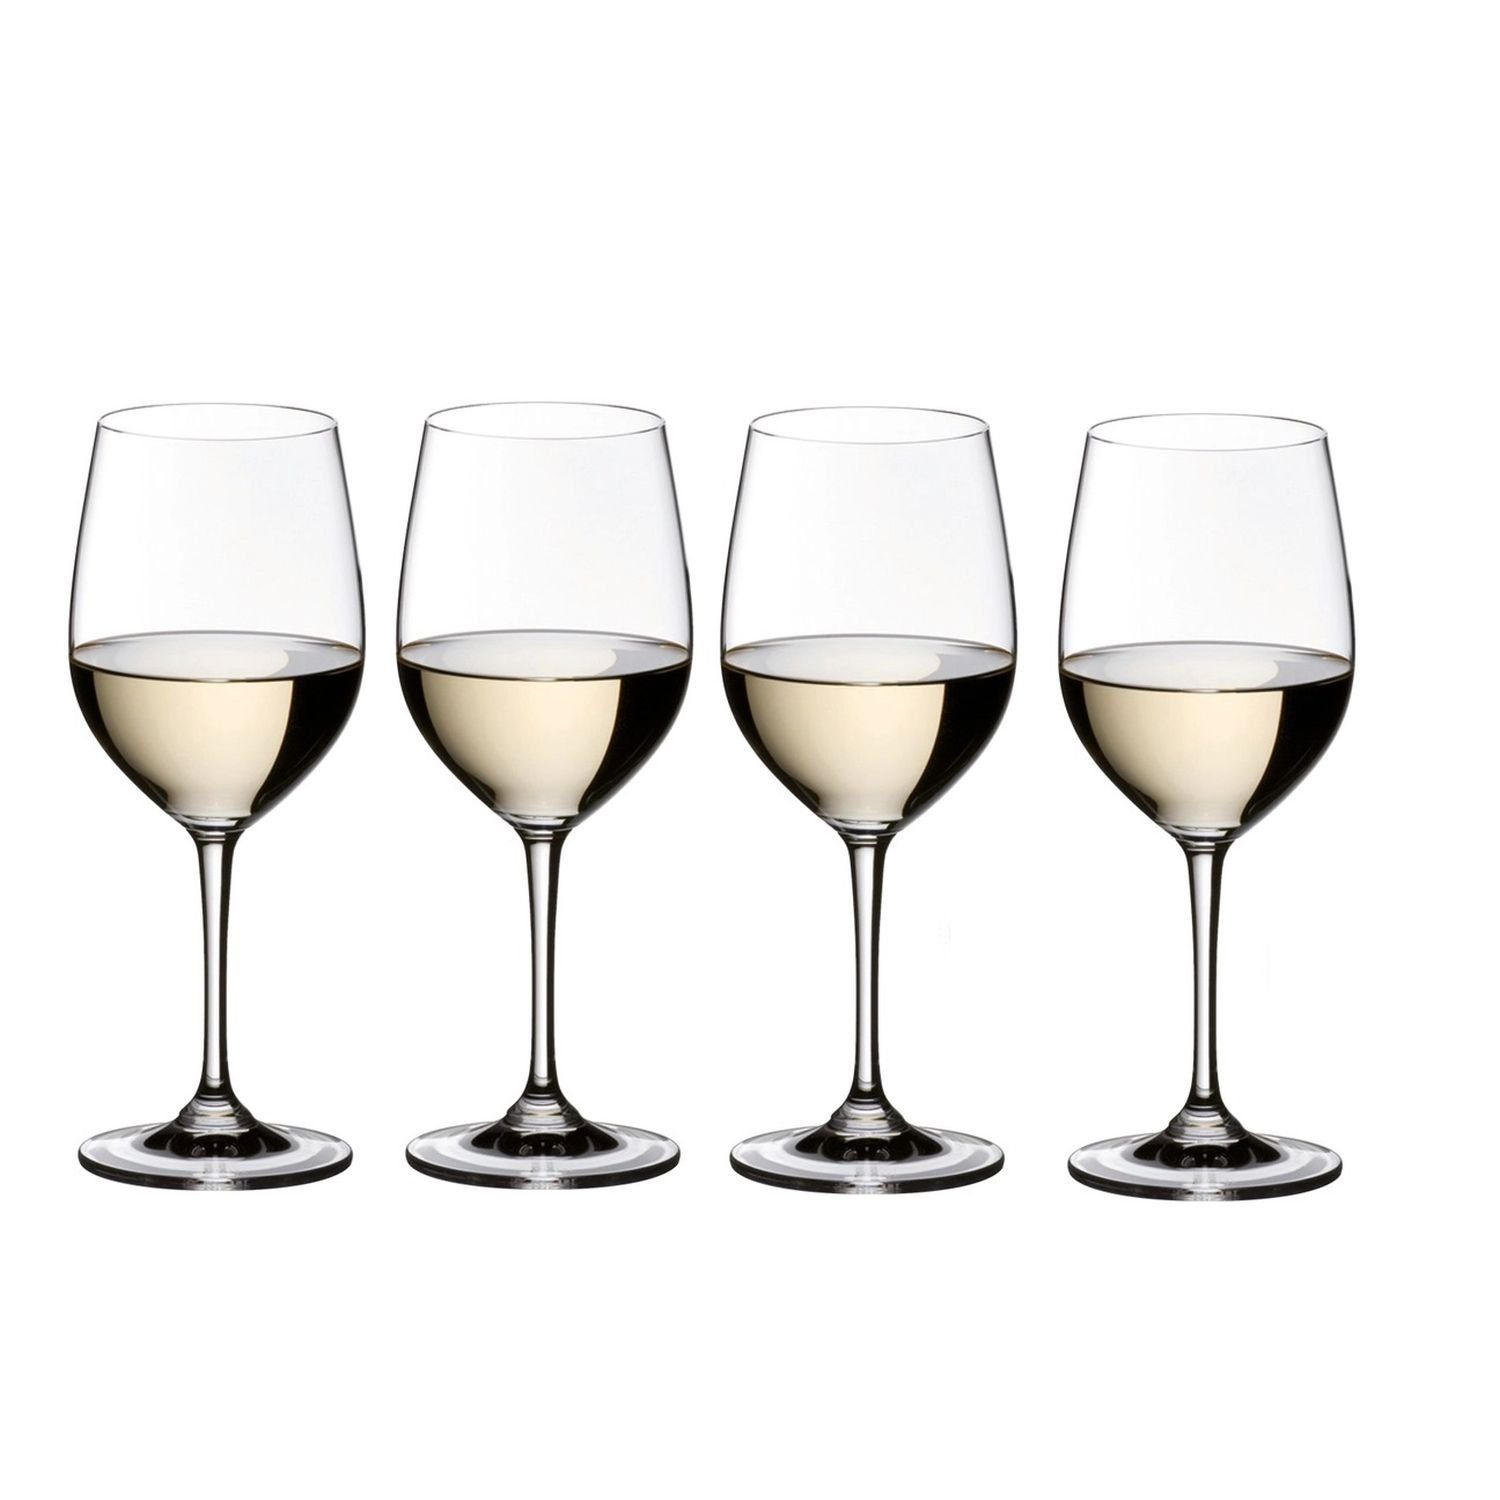 RIEDEL THE WINE GLASS COMPANY Weinglas Vinum Viognier Chardonnay, Kristallglas, 4er Set